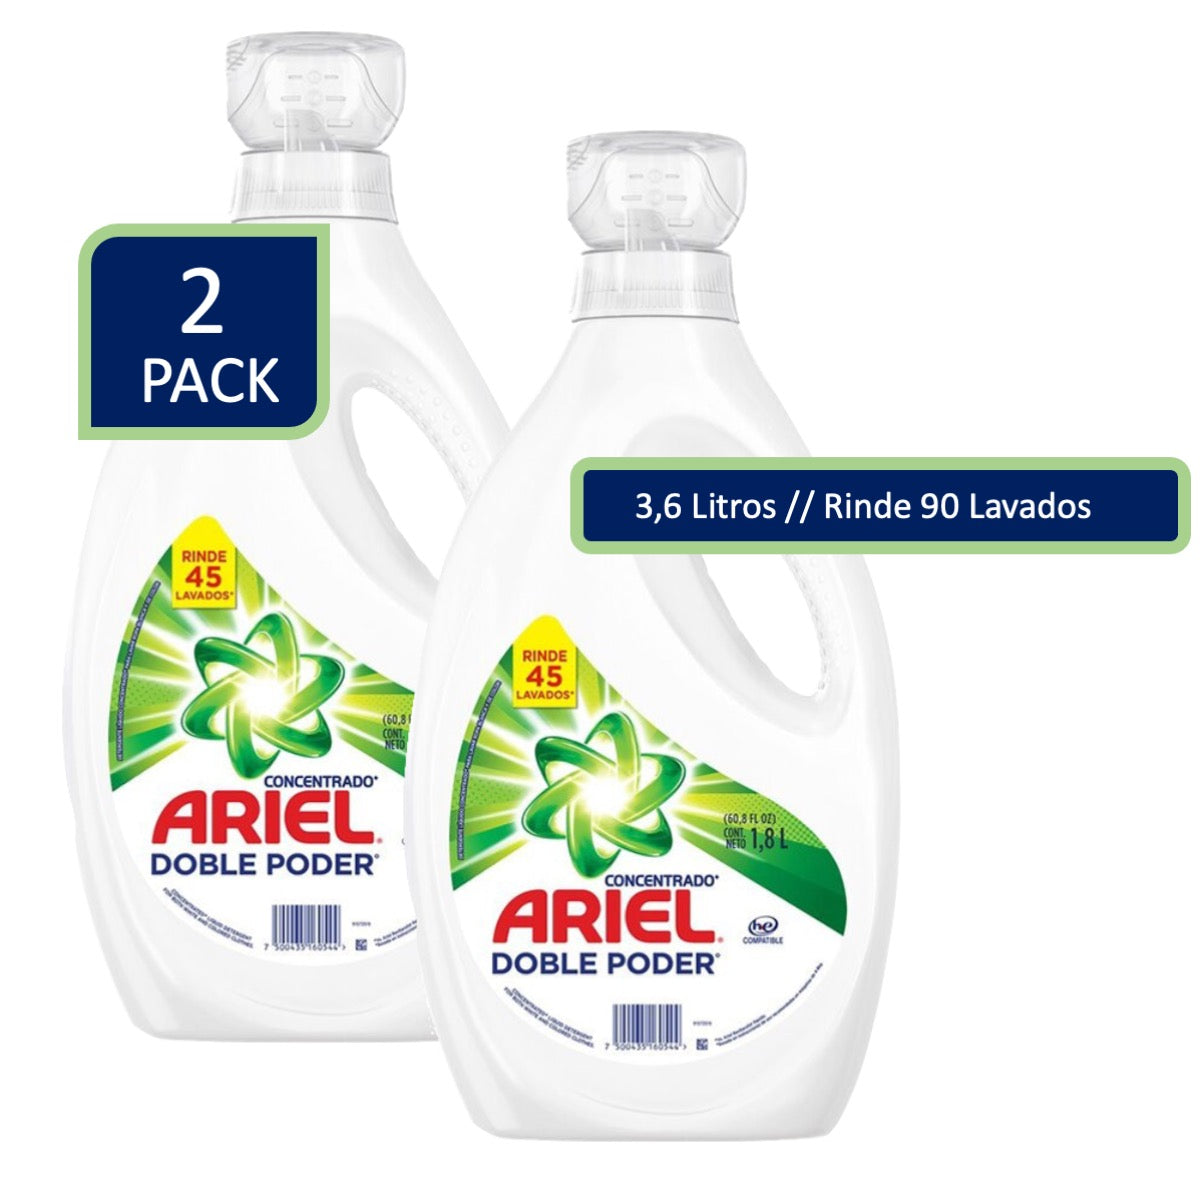 Detergente Líquido Ariel Doble Poder 1,8 litros Pack 2 unid. – Blades cl